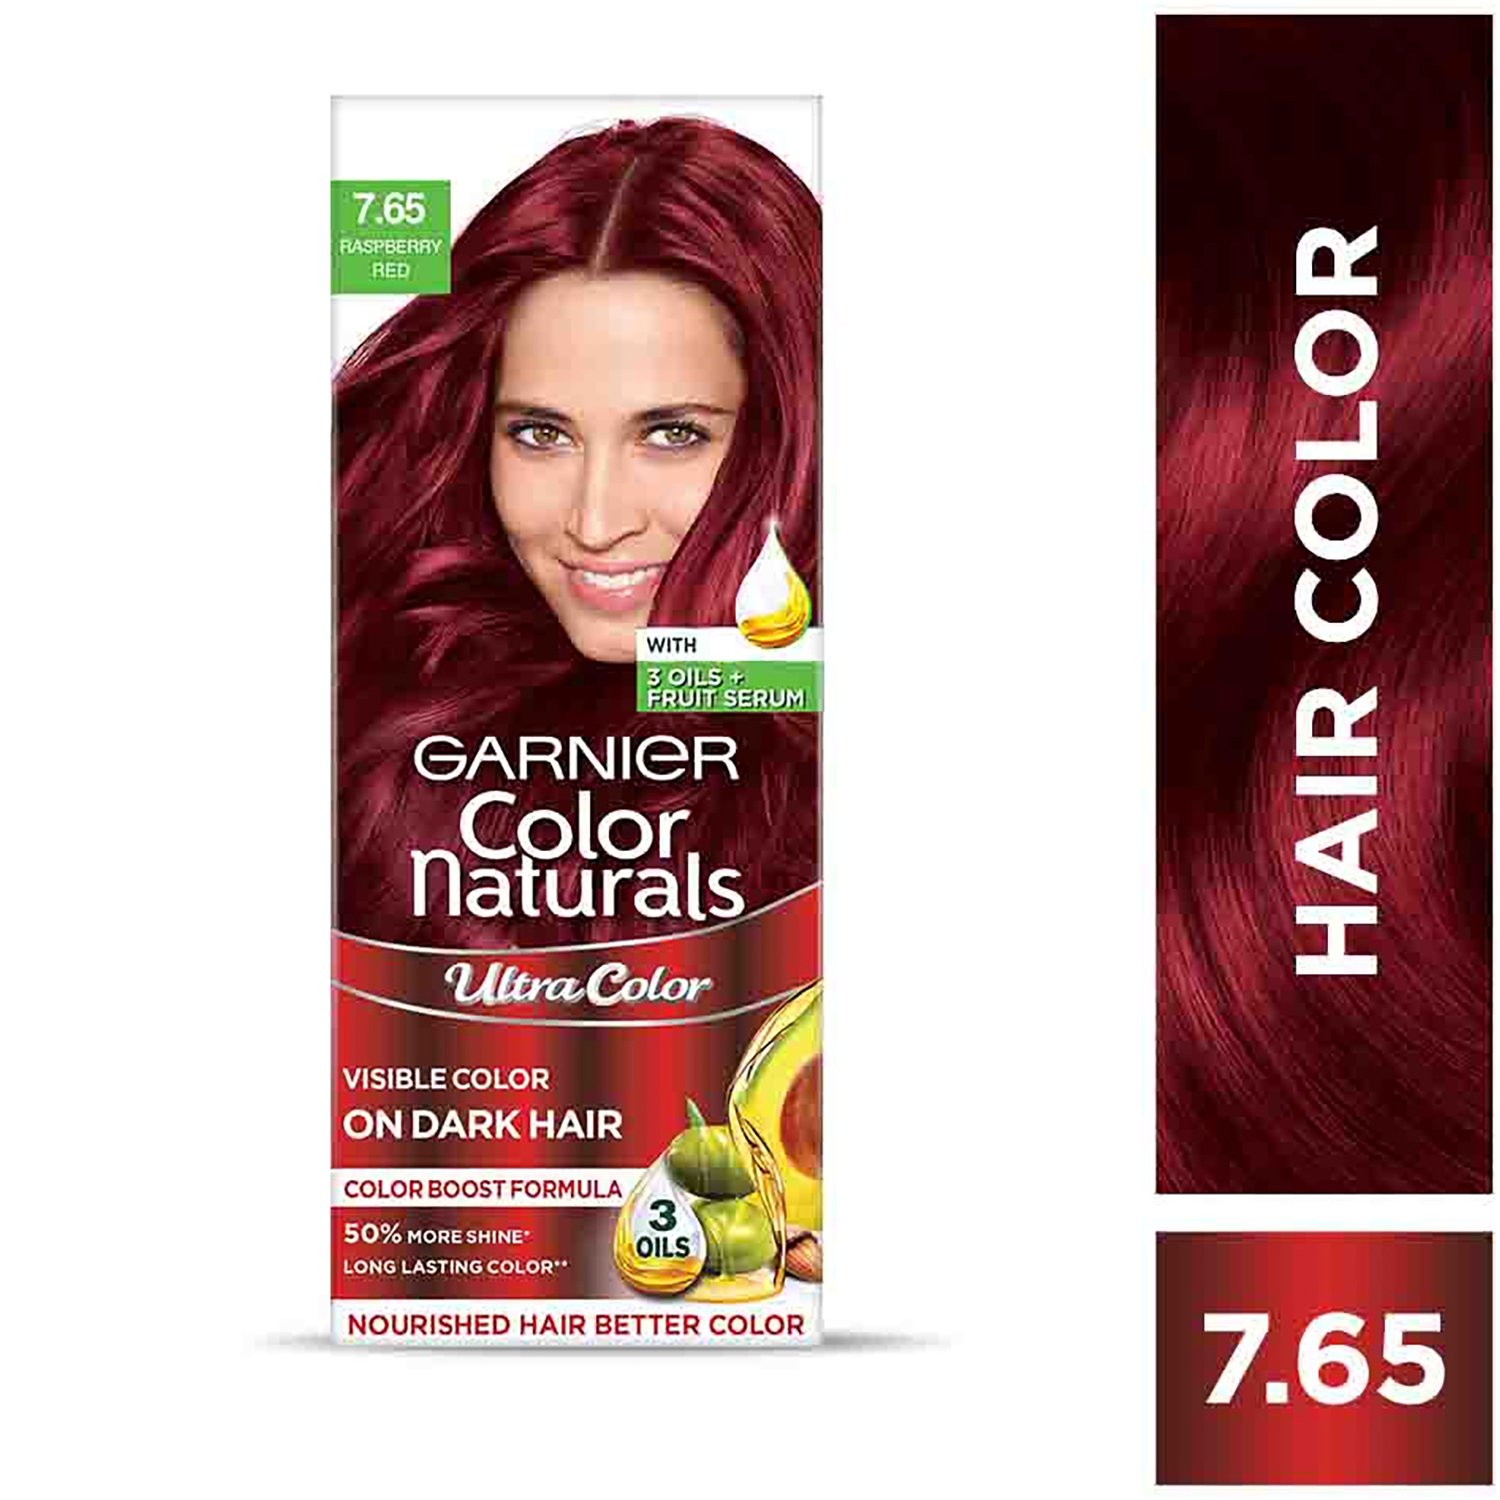 Garnier | Garnier Color Naturals Creme Riche Hair Color - Shade 7.65 Raspberry Red (55ml + 50g)